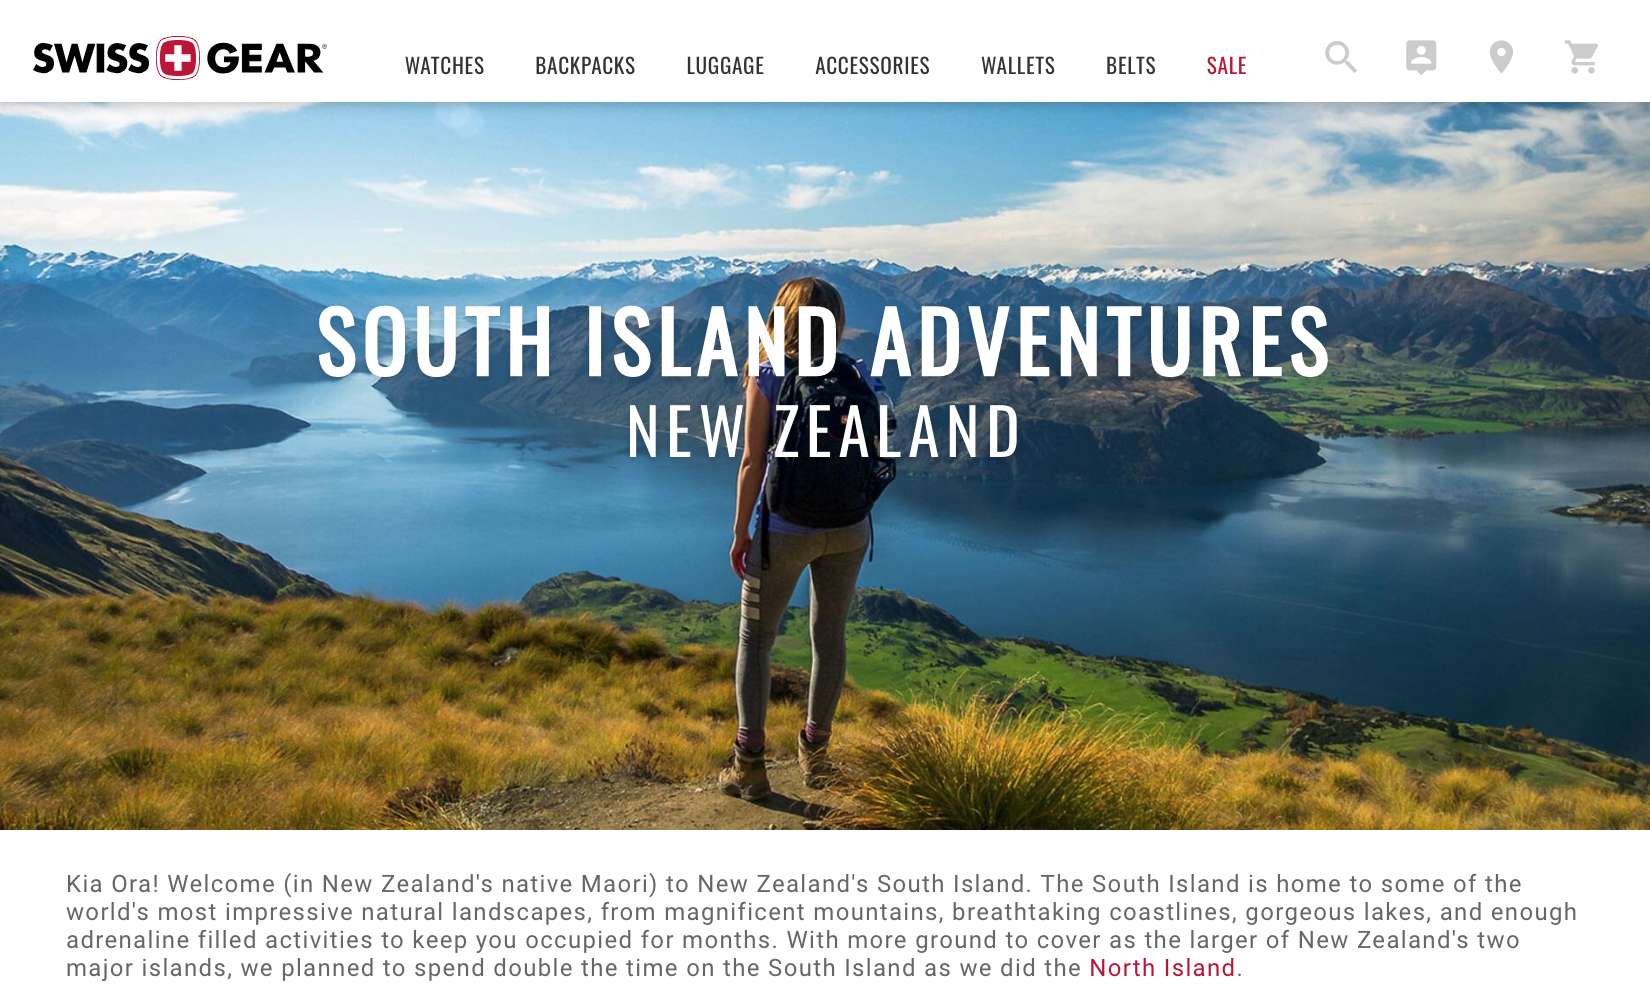 SWISSGEAR.com South Island Adventures blog by go4theglobe